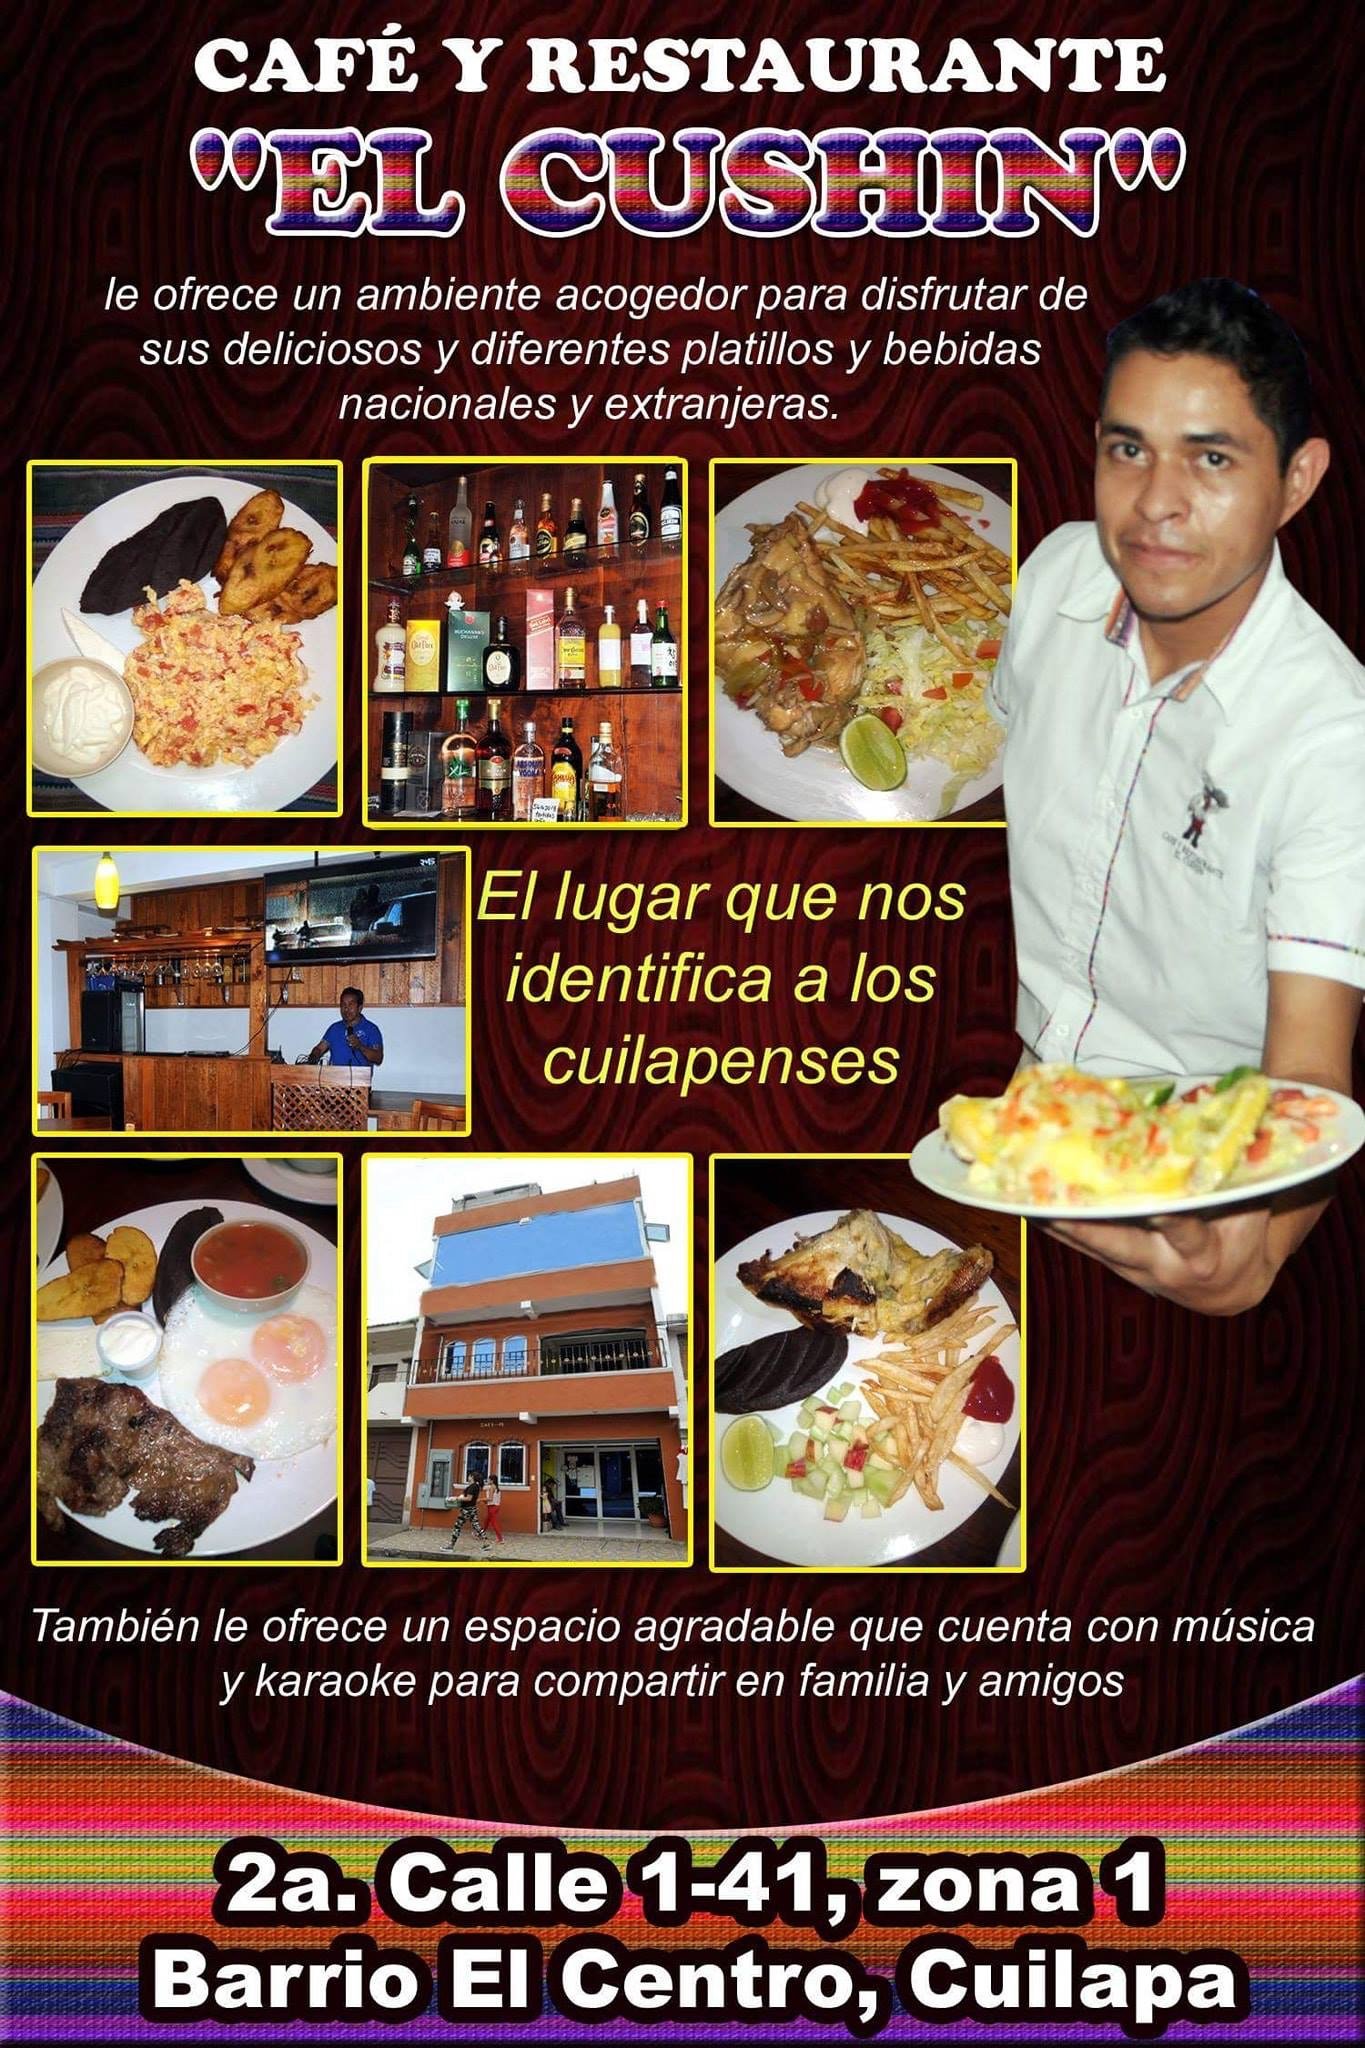 Café Restaurante: El Cushín - ANUNCIOS - Basic Opennemas - Opennemas newspapers - CMS periodico Online service for digital newspapers